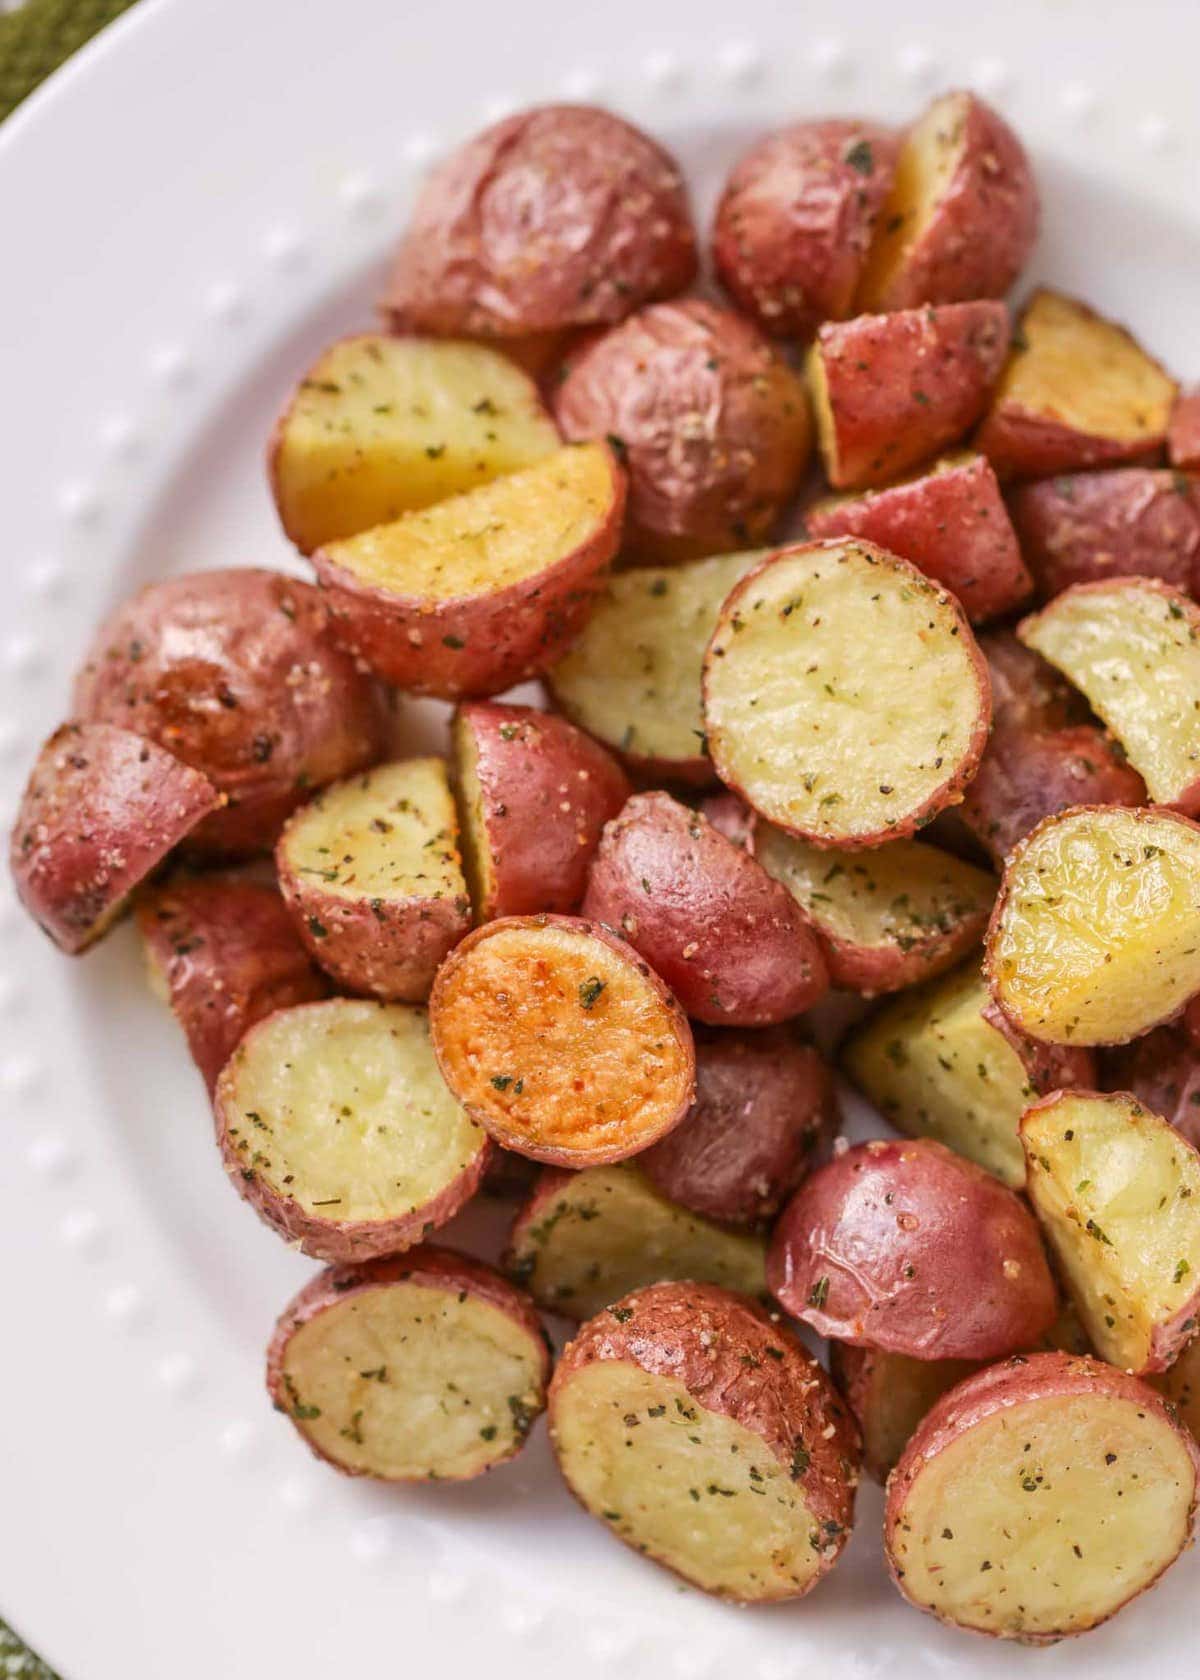 Roasted Red Potatoes Recipe on baking dish.